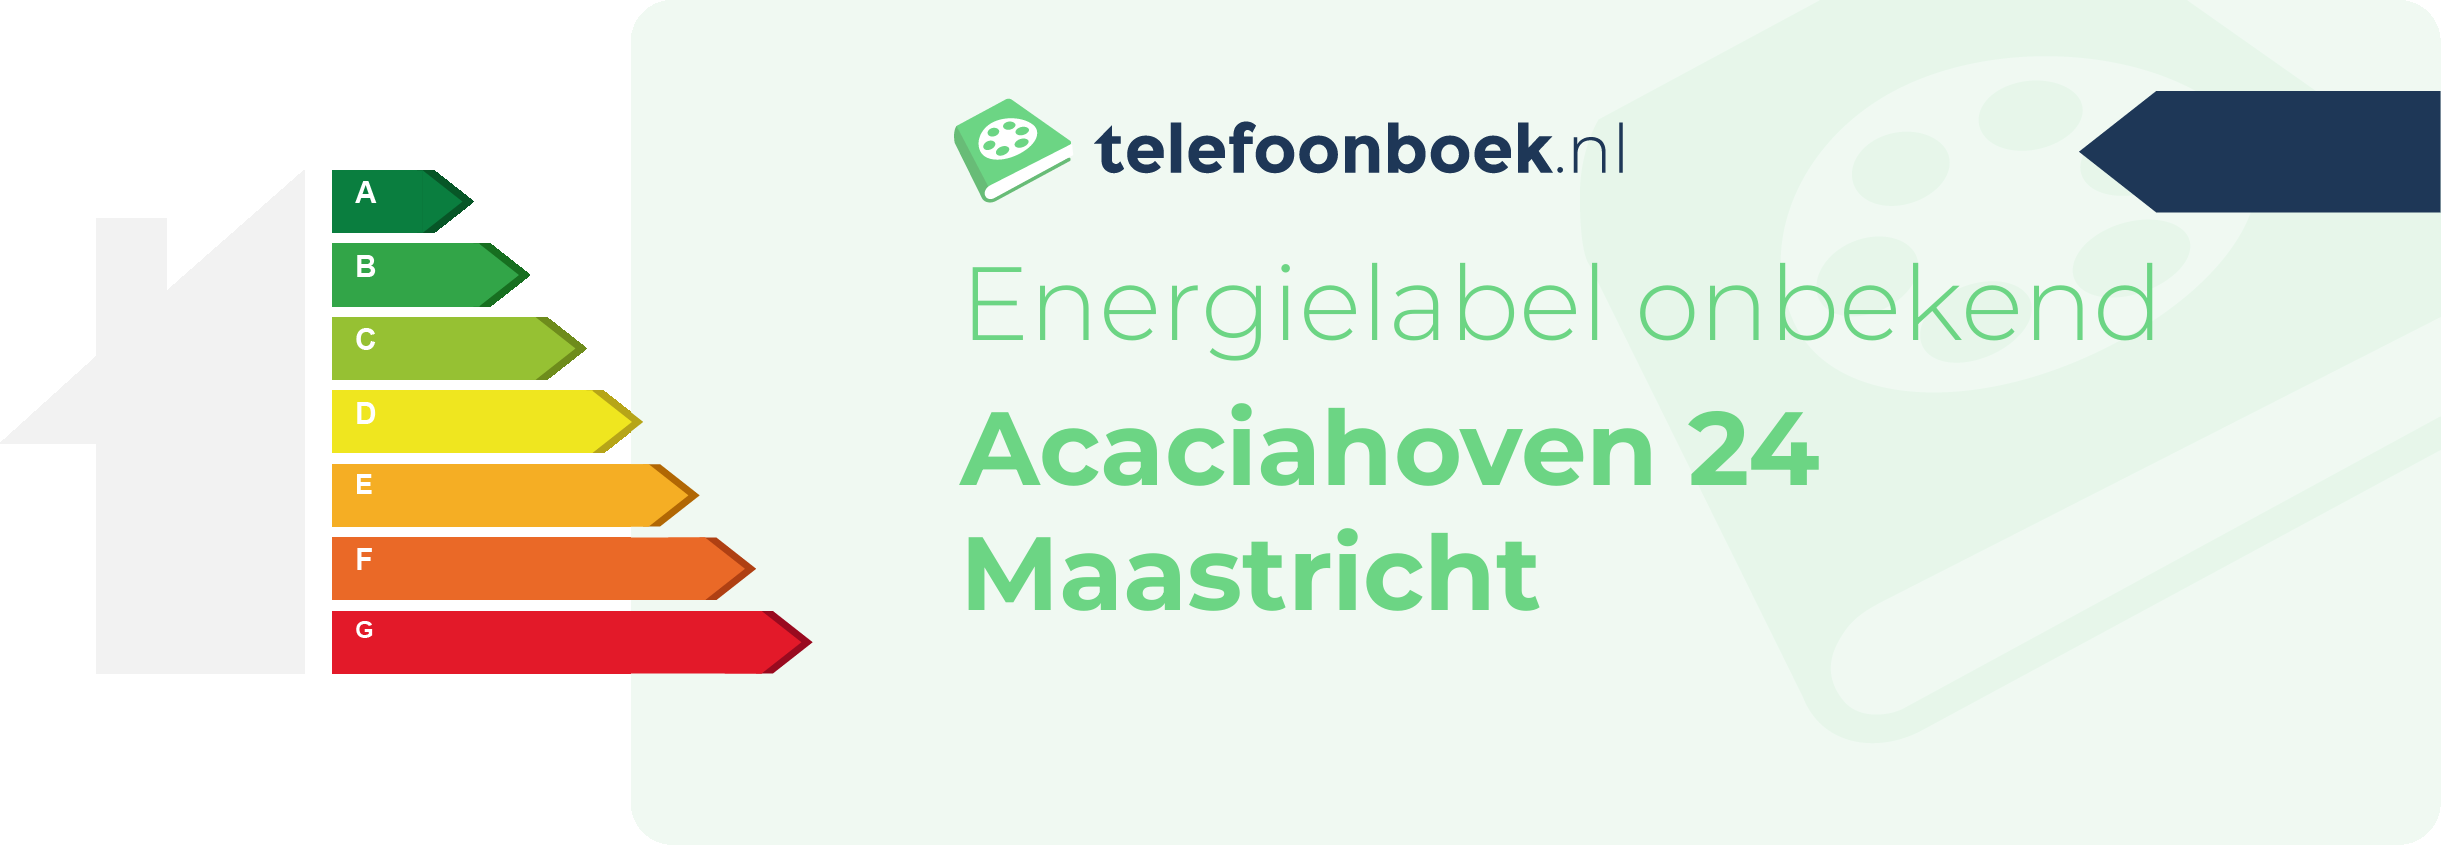 Energielabel Acaciahoven 24 Maastricht